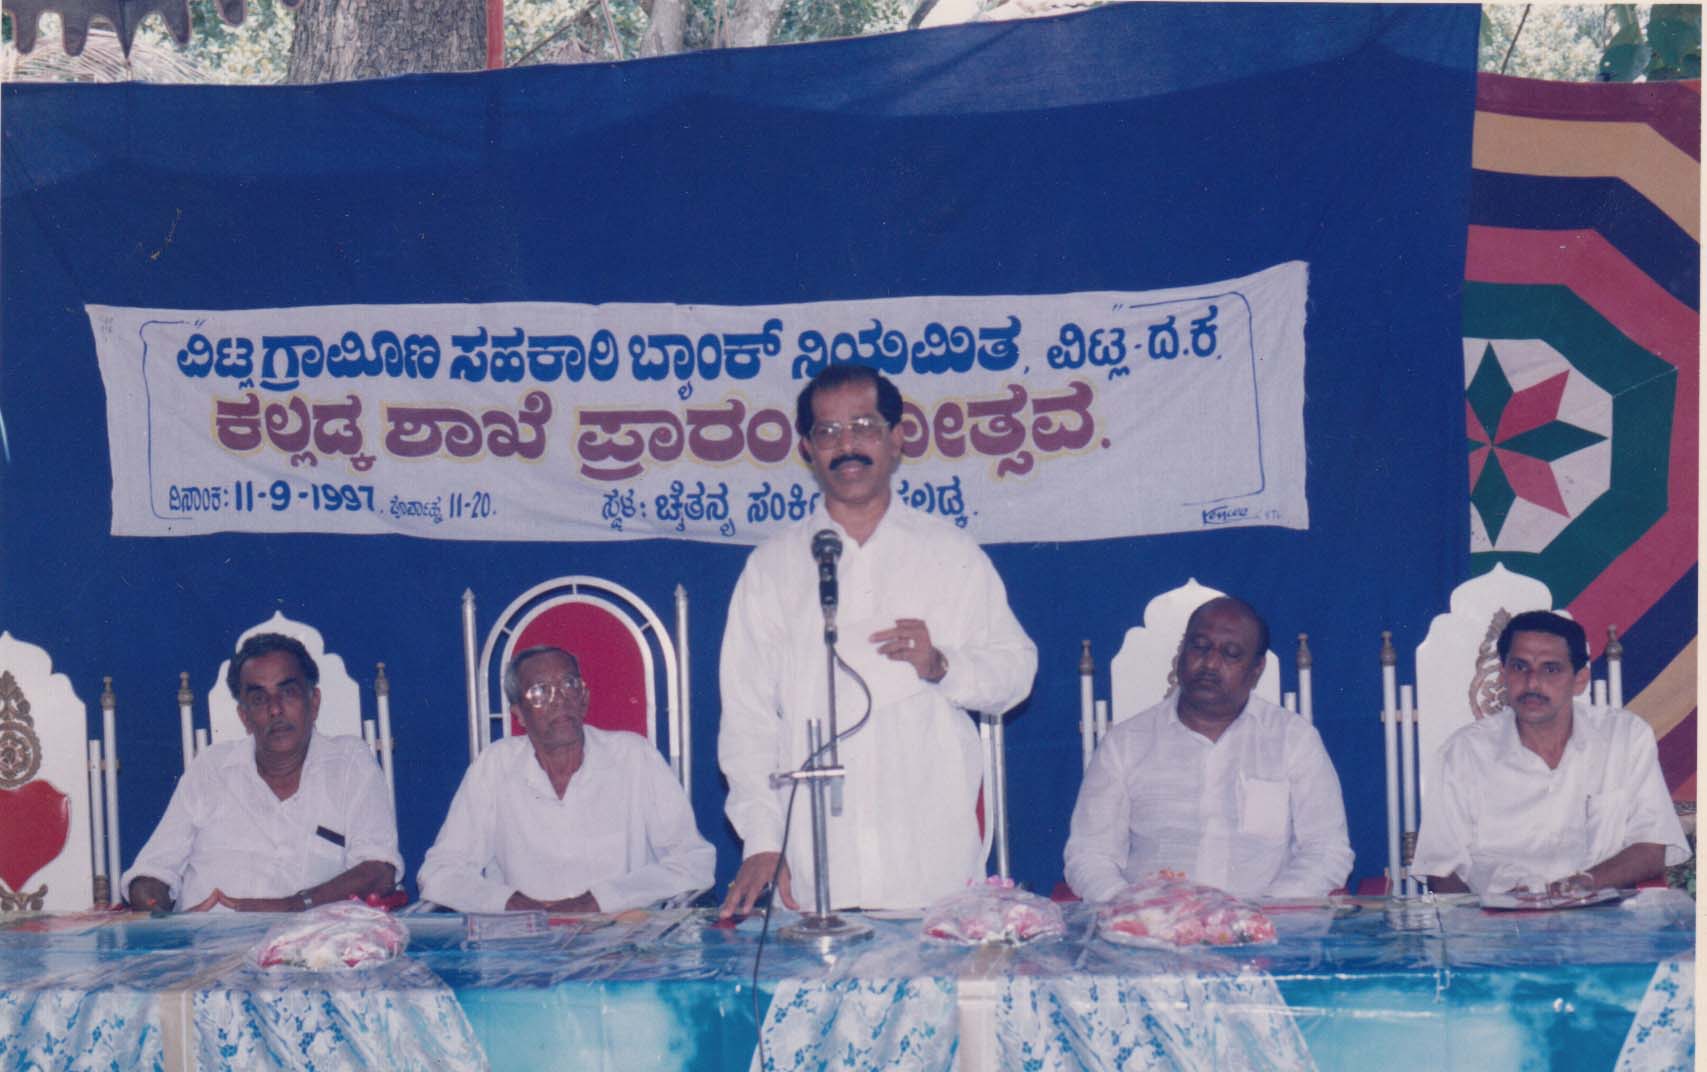 Inauguration of Kalladka Branch by Sri Rukmaya Poojary in 1997